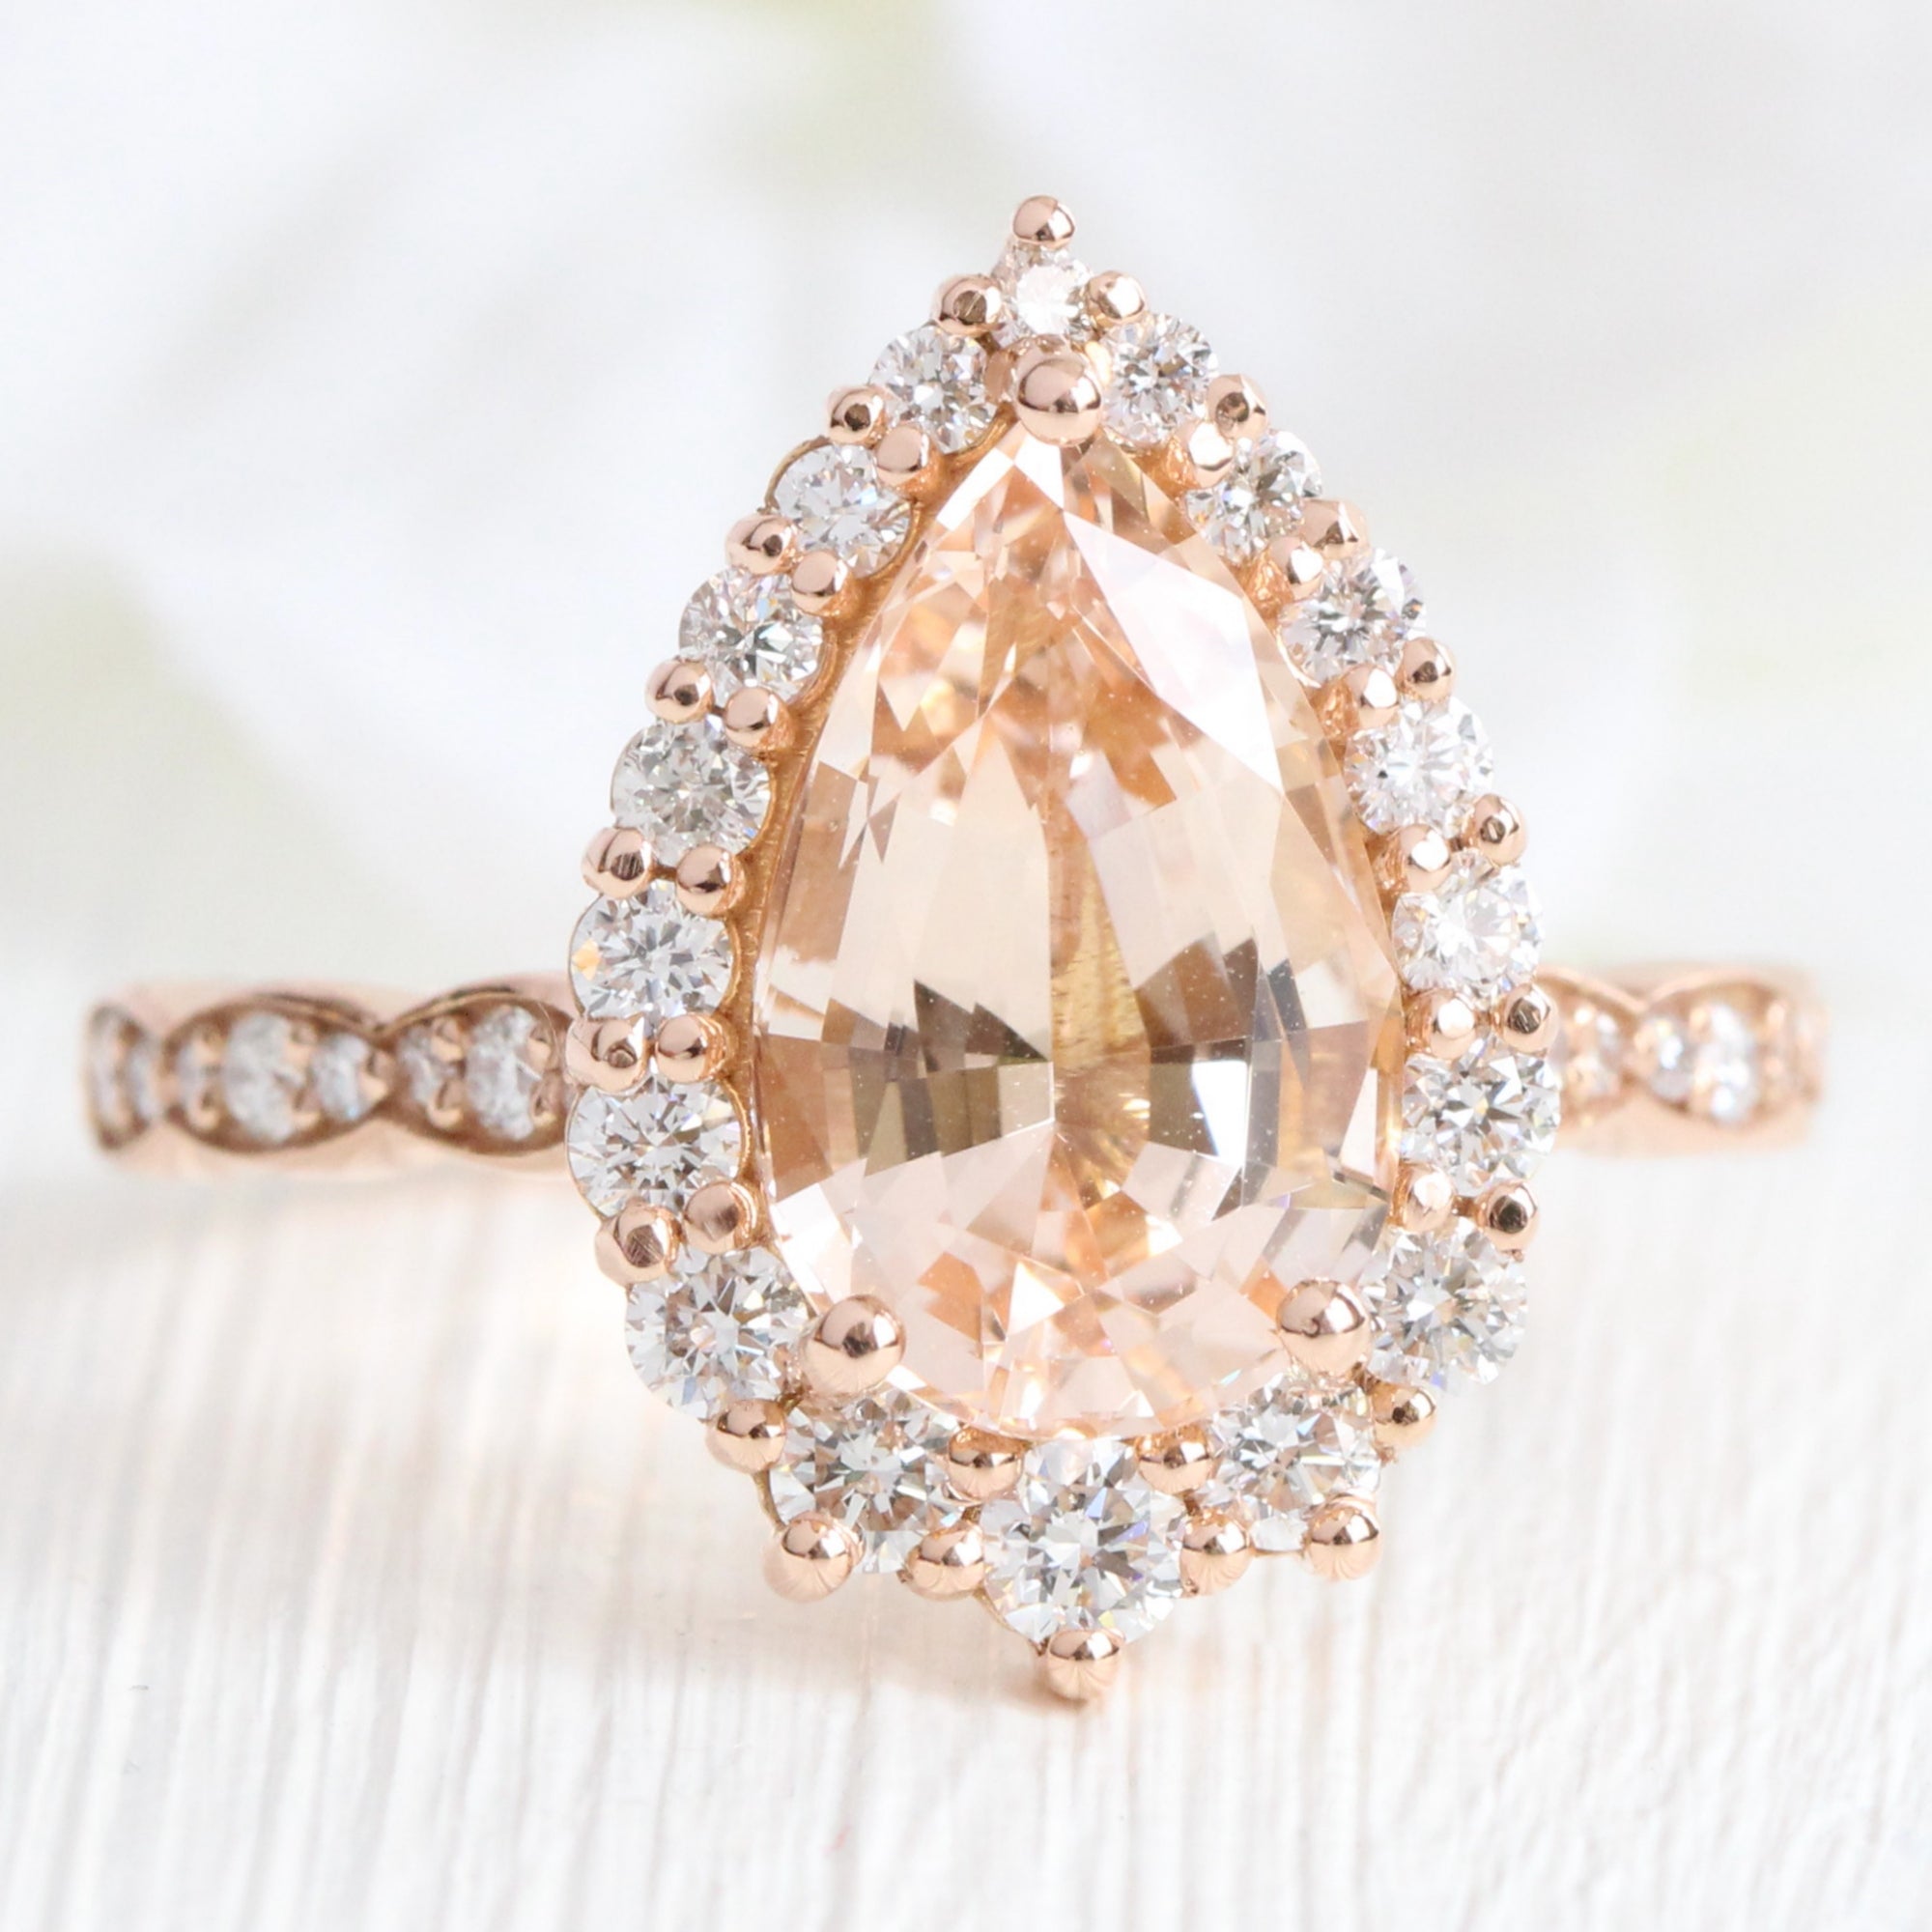 Scalloped Diamond Wedding Ring in Vintage Style Half Eternity Band